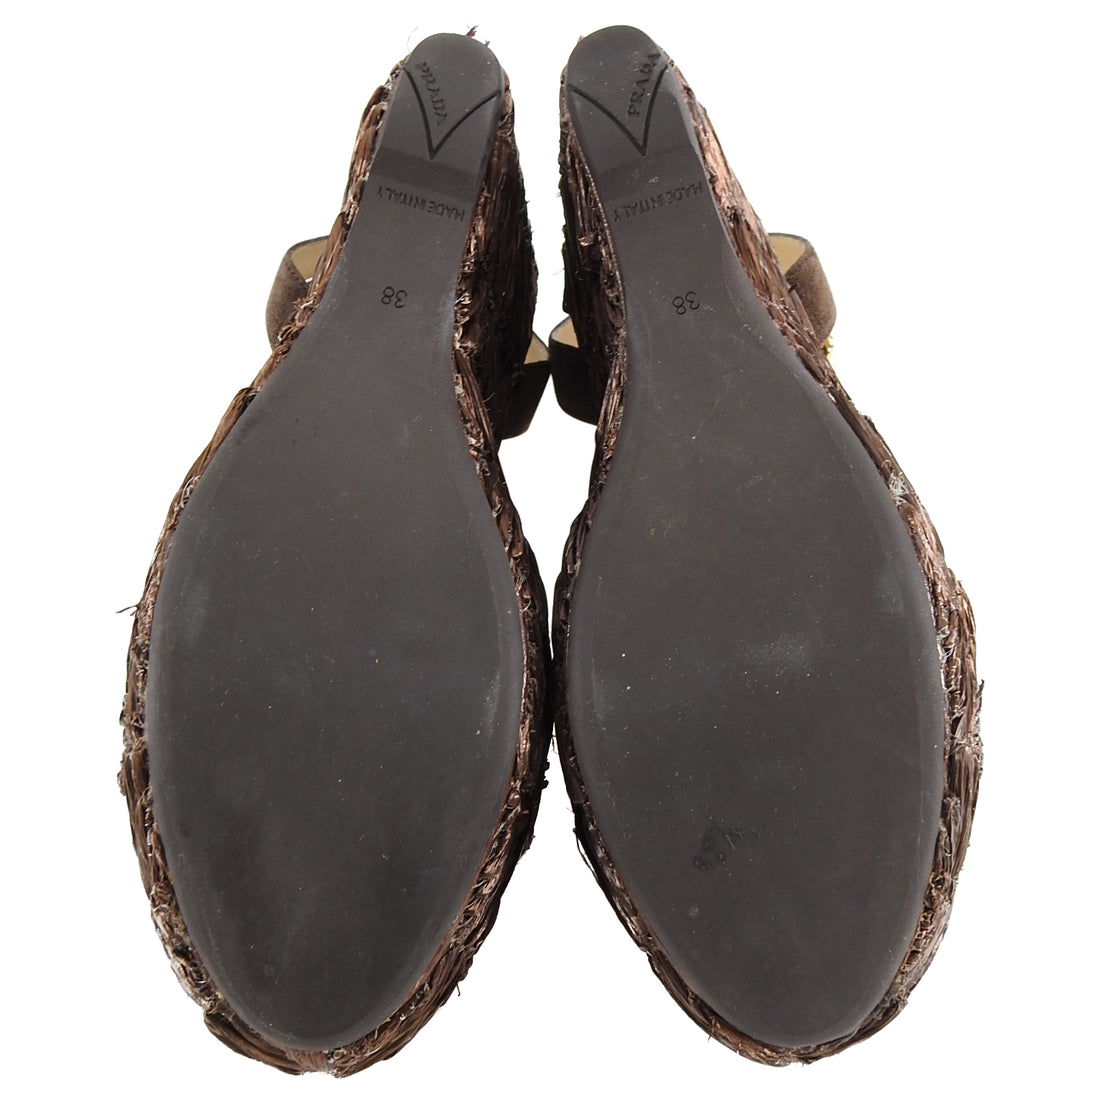 Prada Brown Raffia Woven Wedge Sandals - 38